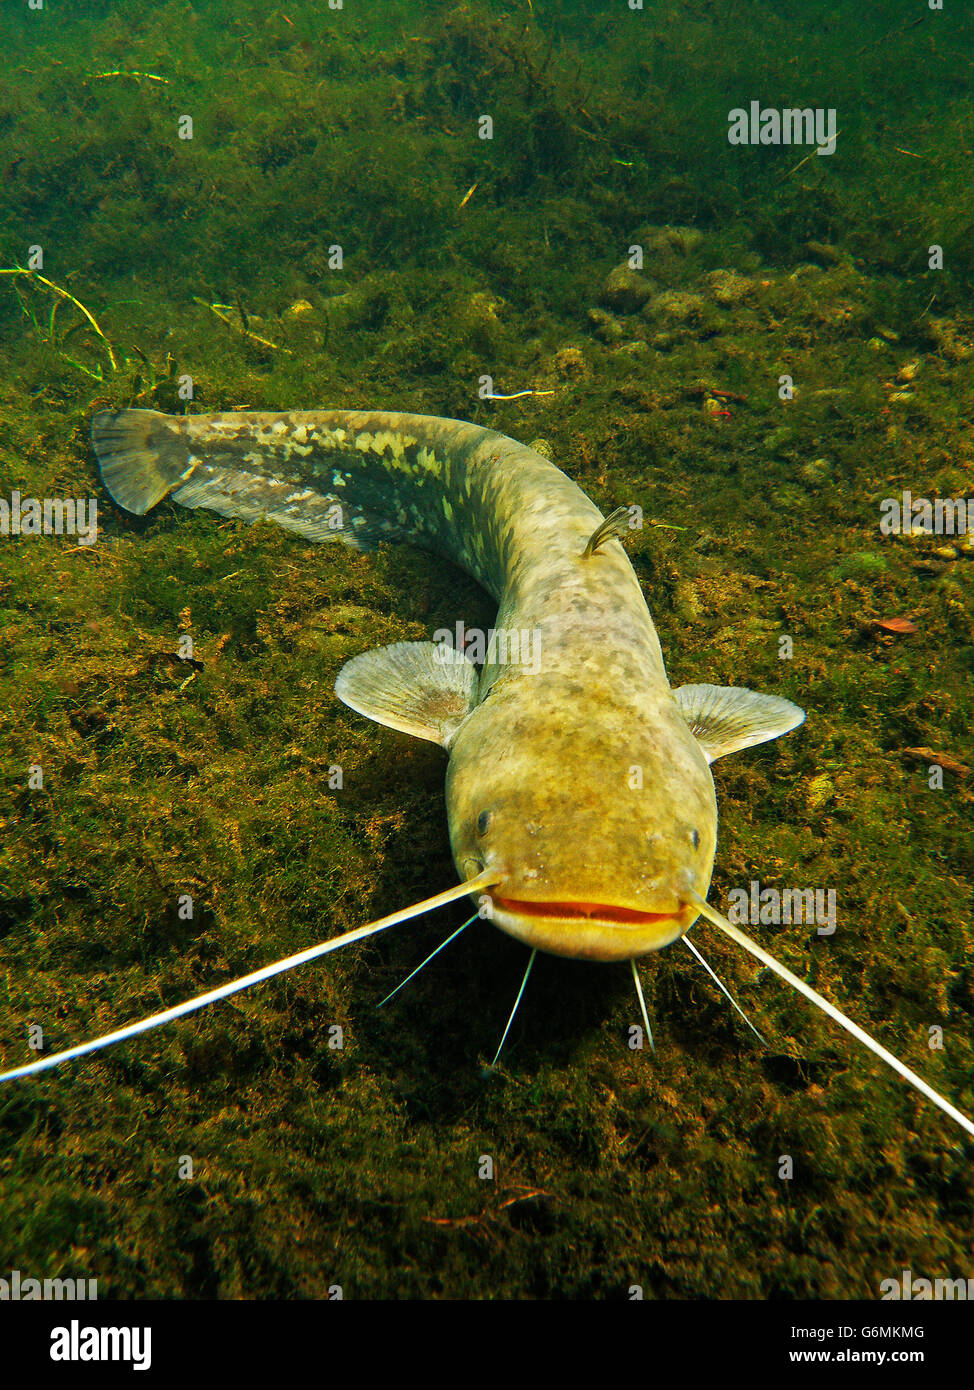 wels catfish, Silurus glanis, Baden-Wurttemberg, Germany Stock Photo